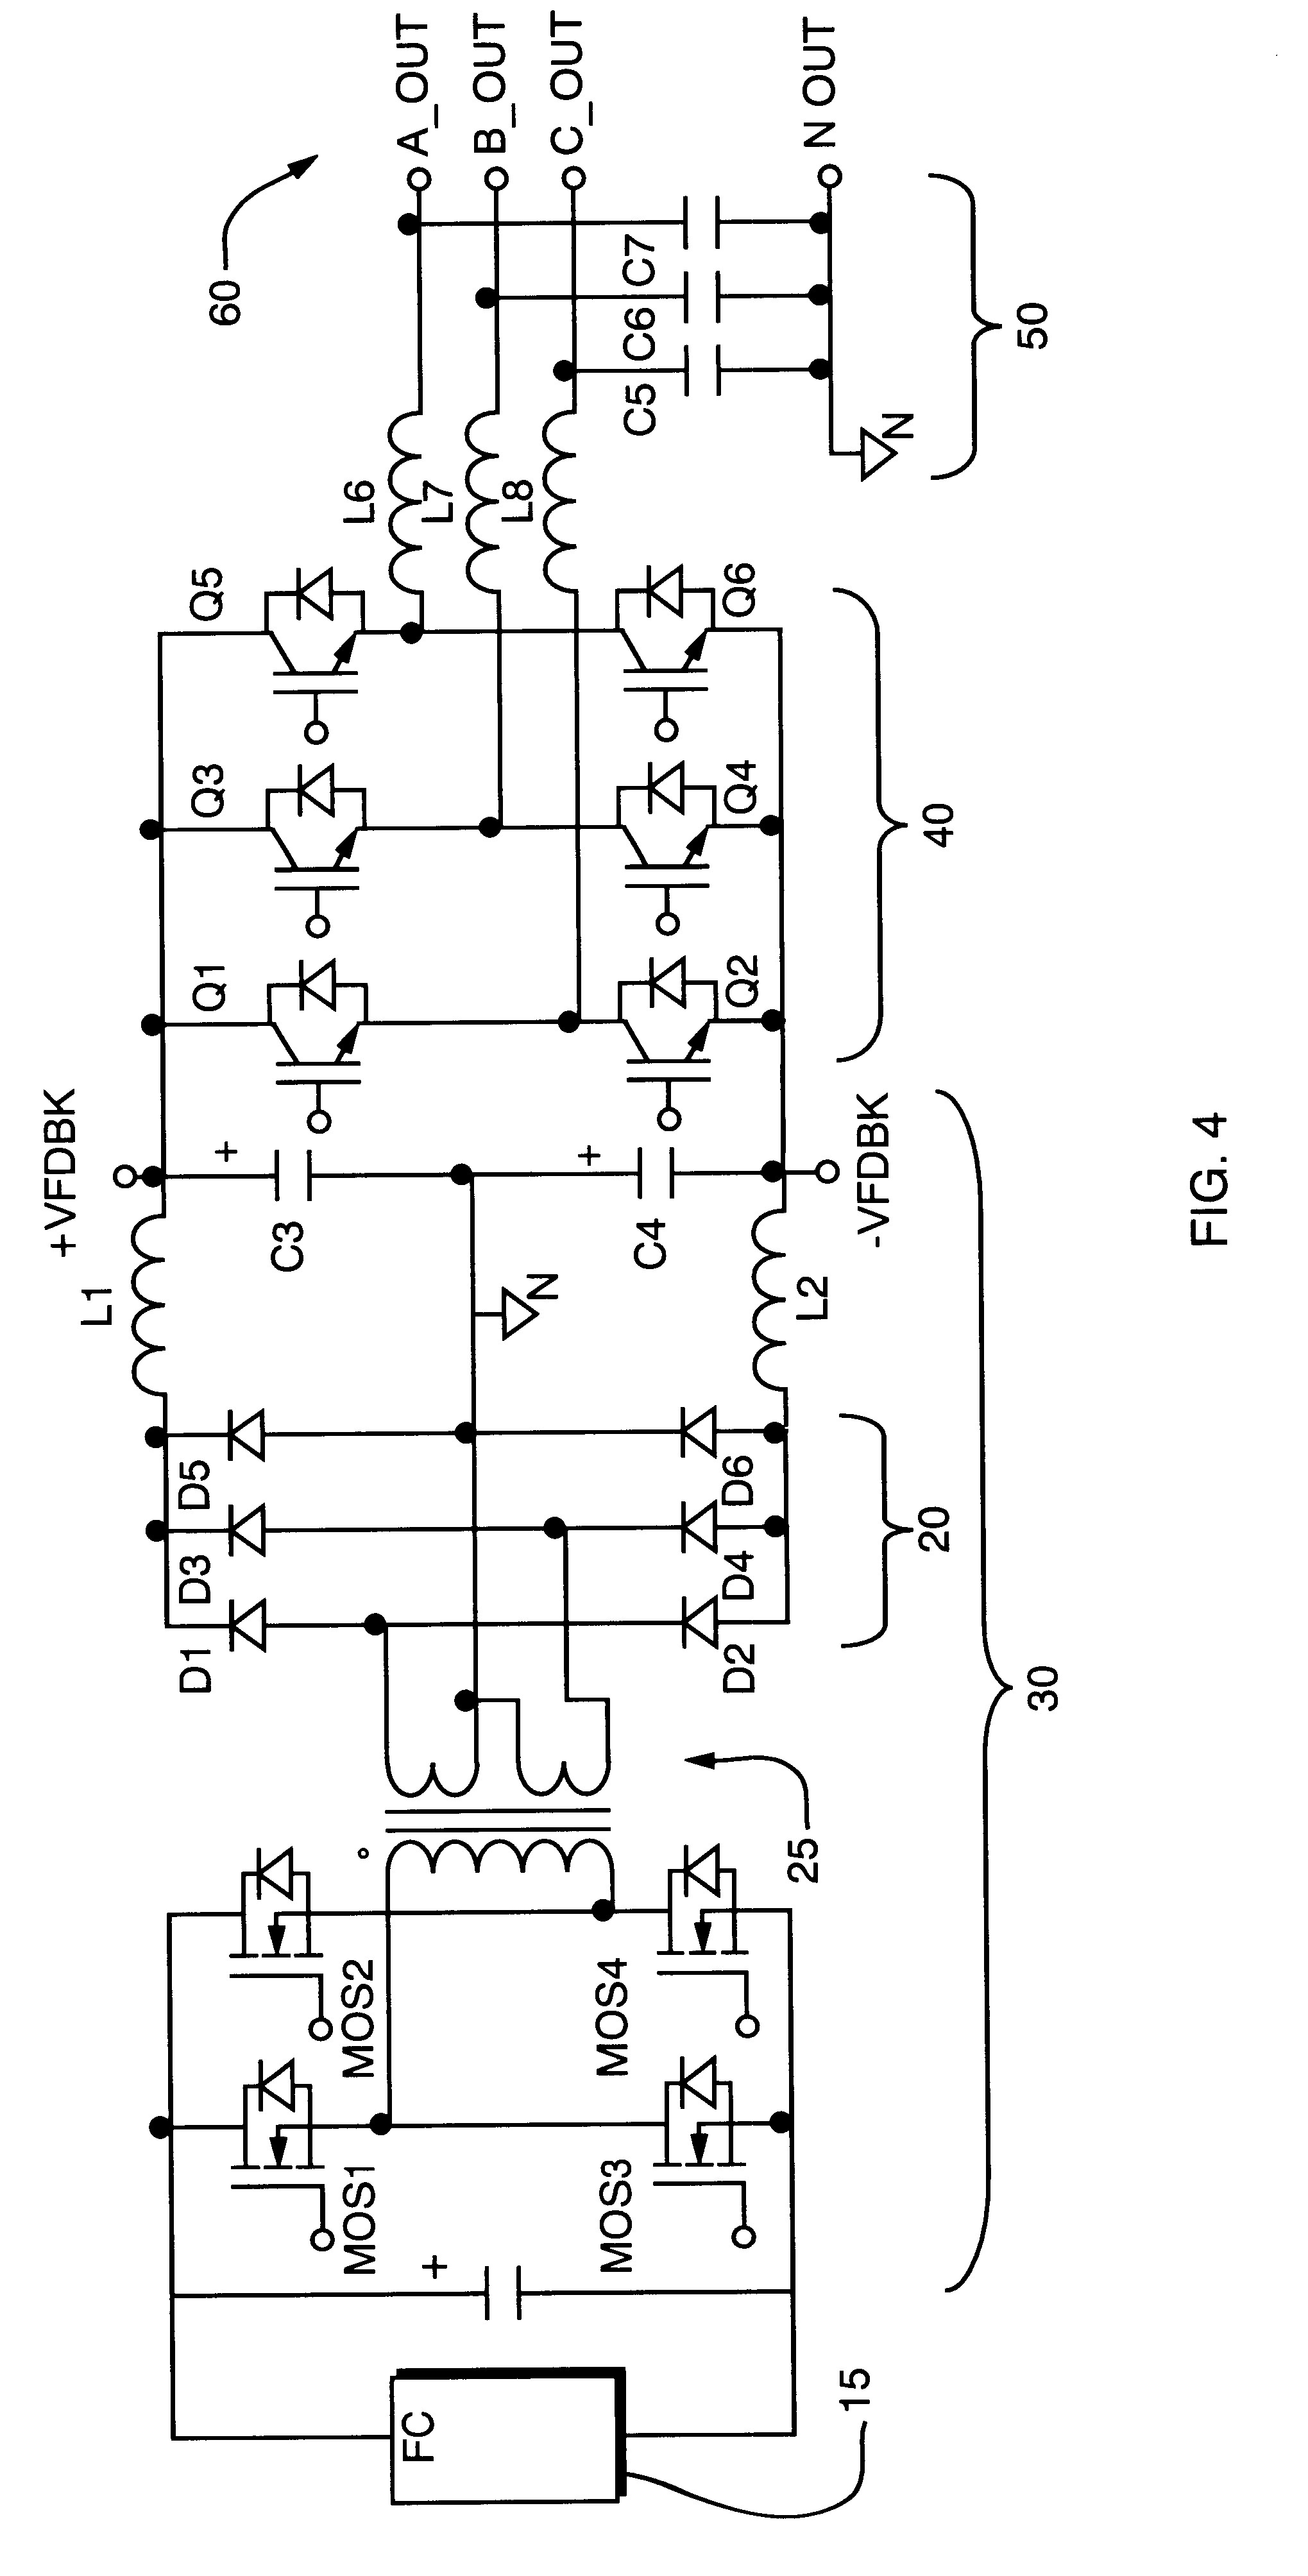 3 Phase Motor Wiring Diagram Brevetto Us Transformerless Phase Power Inverter Patent Of 3 Phase Motor Wiring Diagram